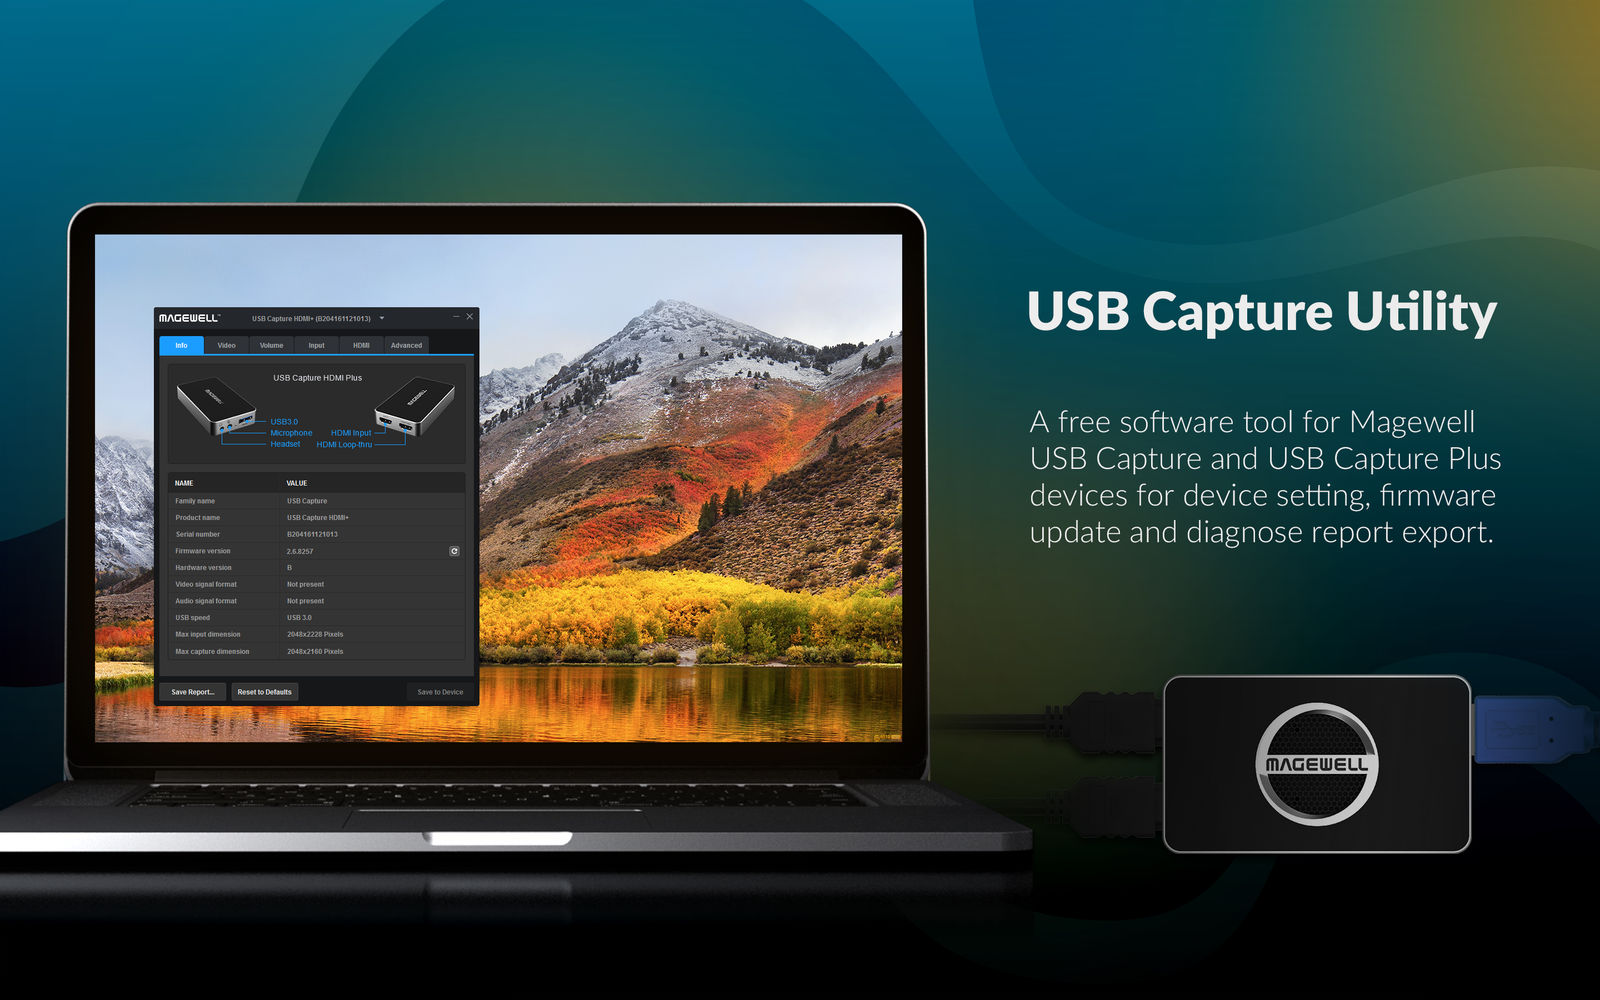 USBCaptureUtility 3.0 : Main Window